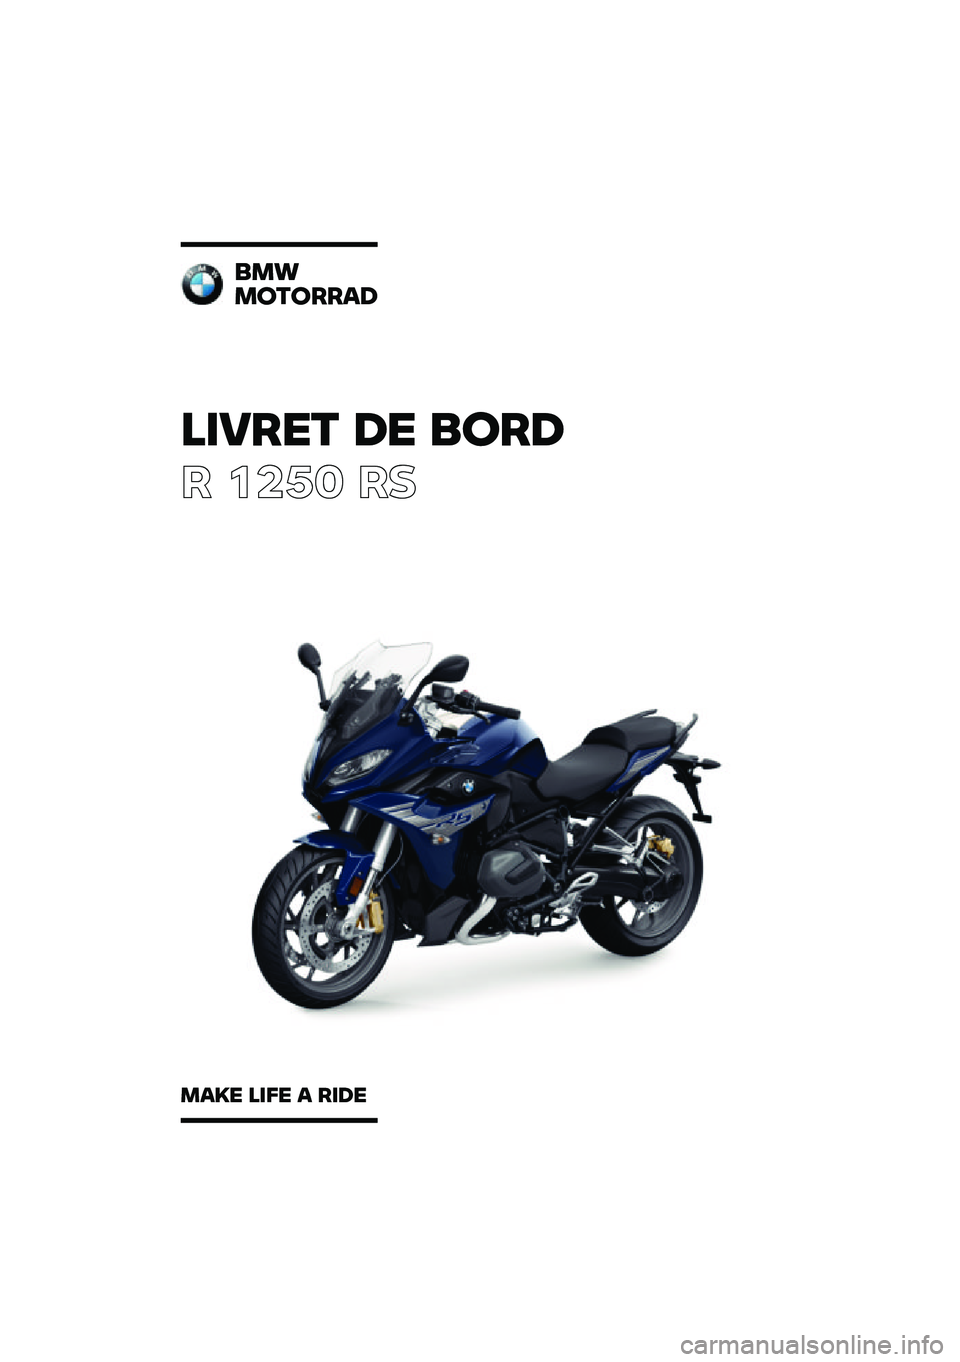 BMW MOTORRAD R 1250 RS 2020  Livret de bord (in French) ������ �\b� �	�
��\b
� ����	 ��
�	��\f
��
��
���
�\b
��
�� ���� �
 ���\b� 